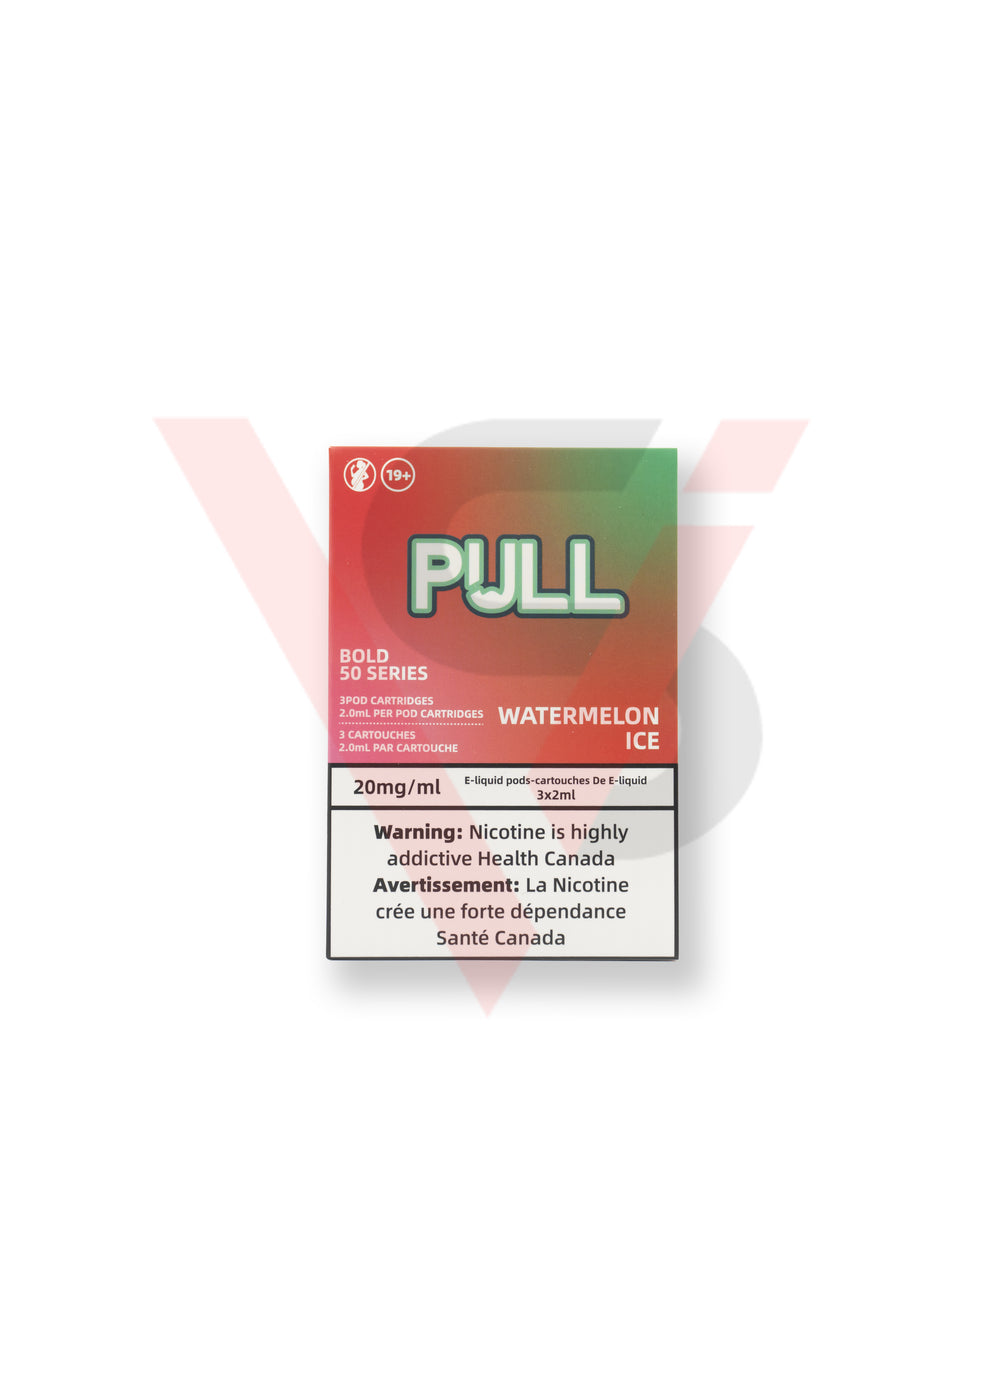 PULL Pod (STLTH compatible)- WATERMELON ICE